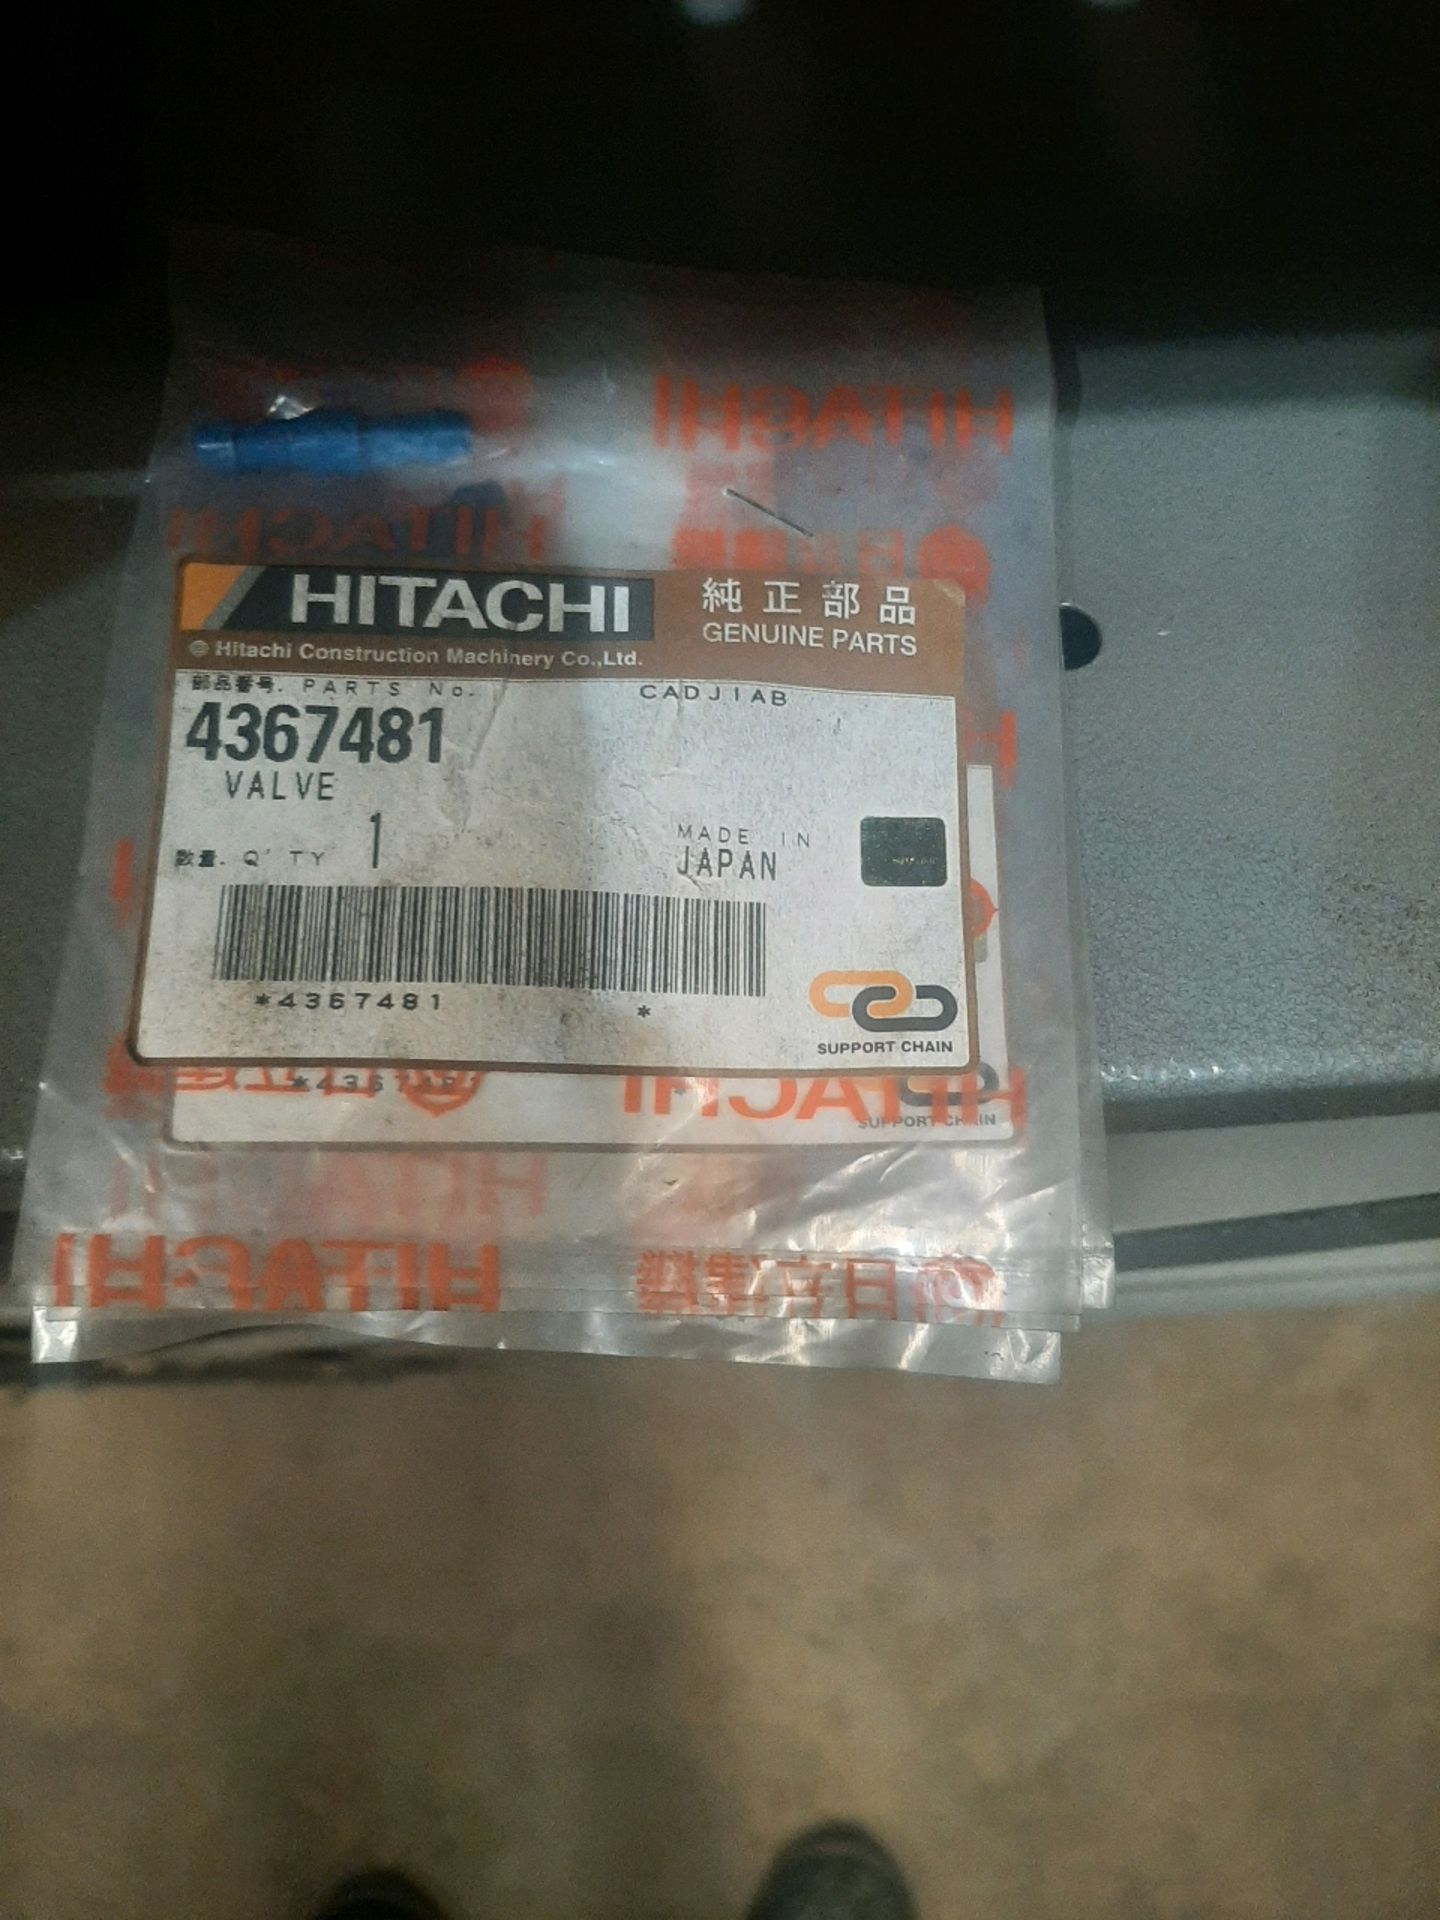 HITACHI MINING ZX870 PARTS - Image 80 of 115